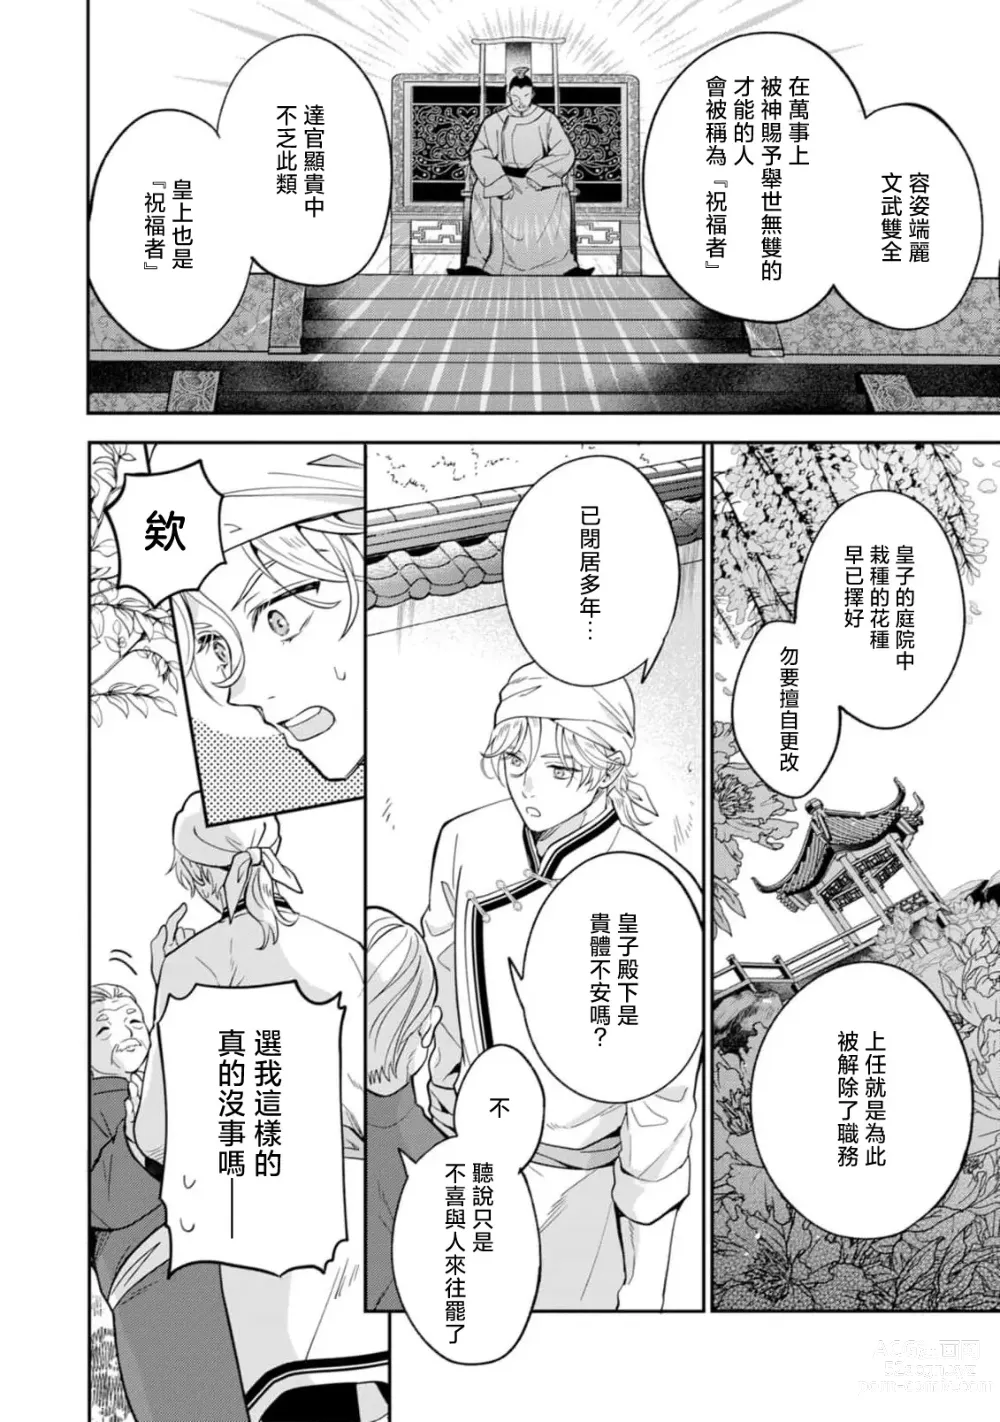 Page 6 of manga 伪装起来的Ω与庭院秘事 1